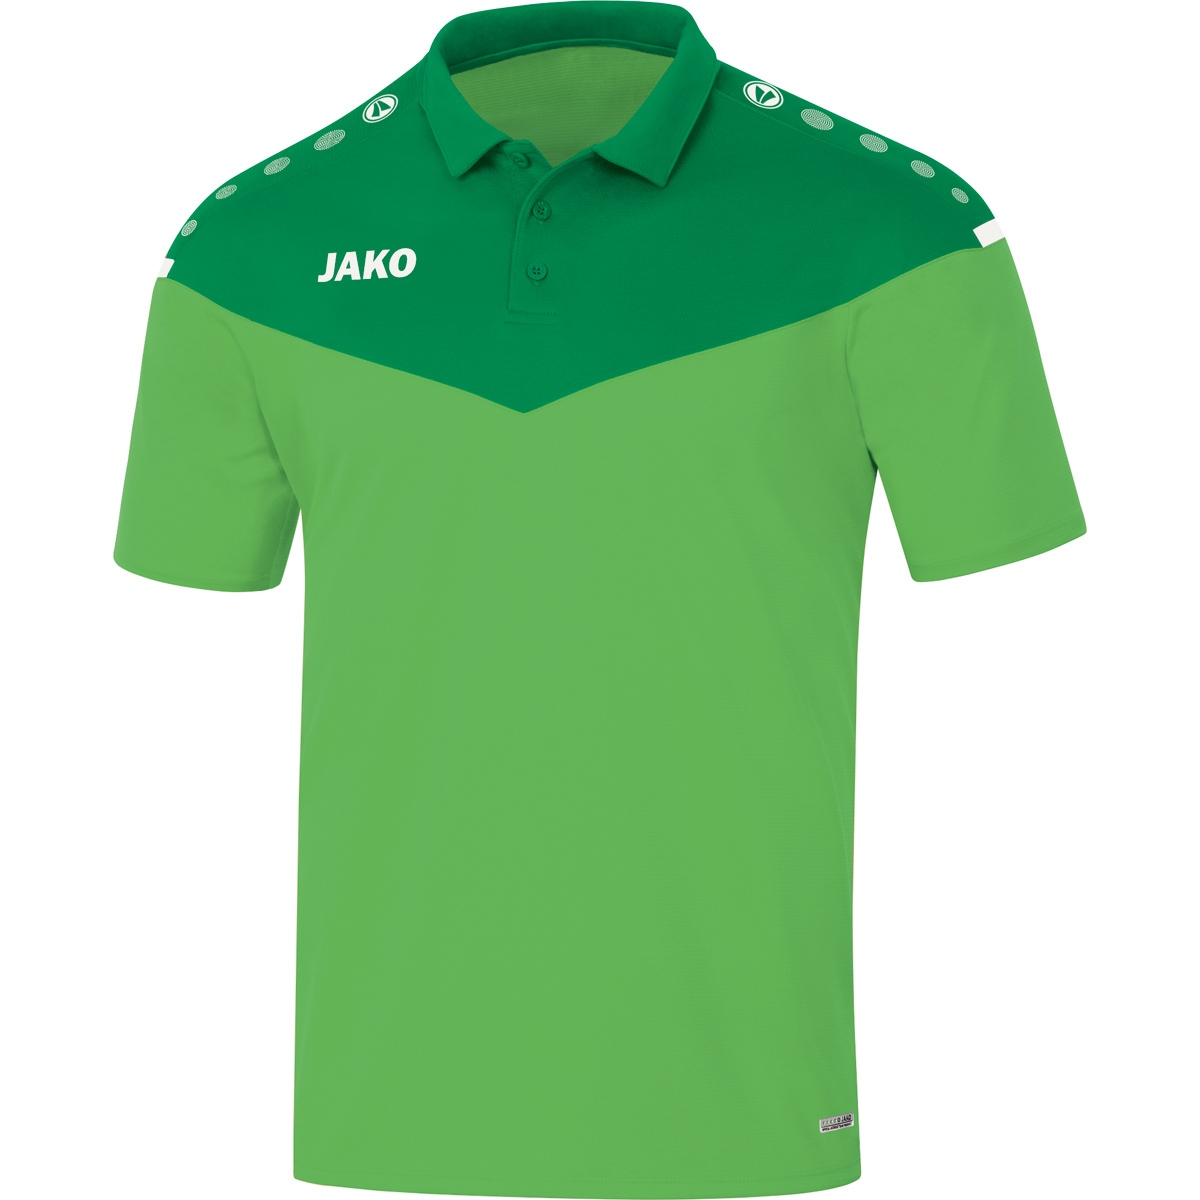 2.0 green/sportgrün, JAKO soft Herren, Gr. Champ Polo 6320 XXL,